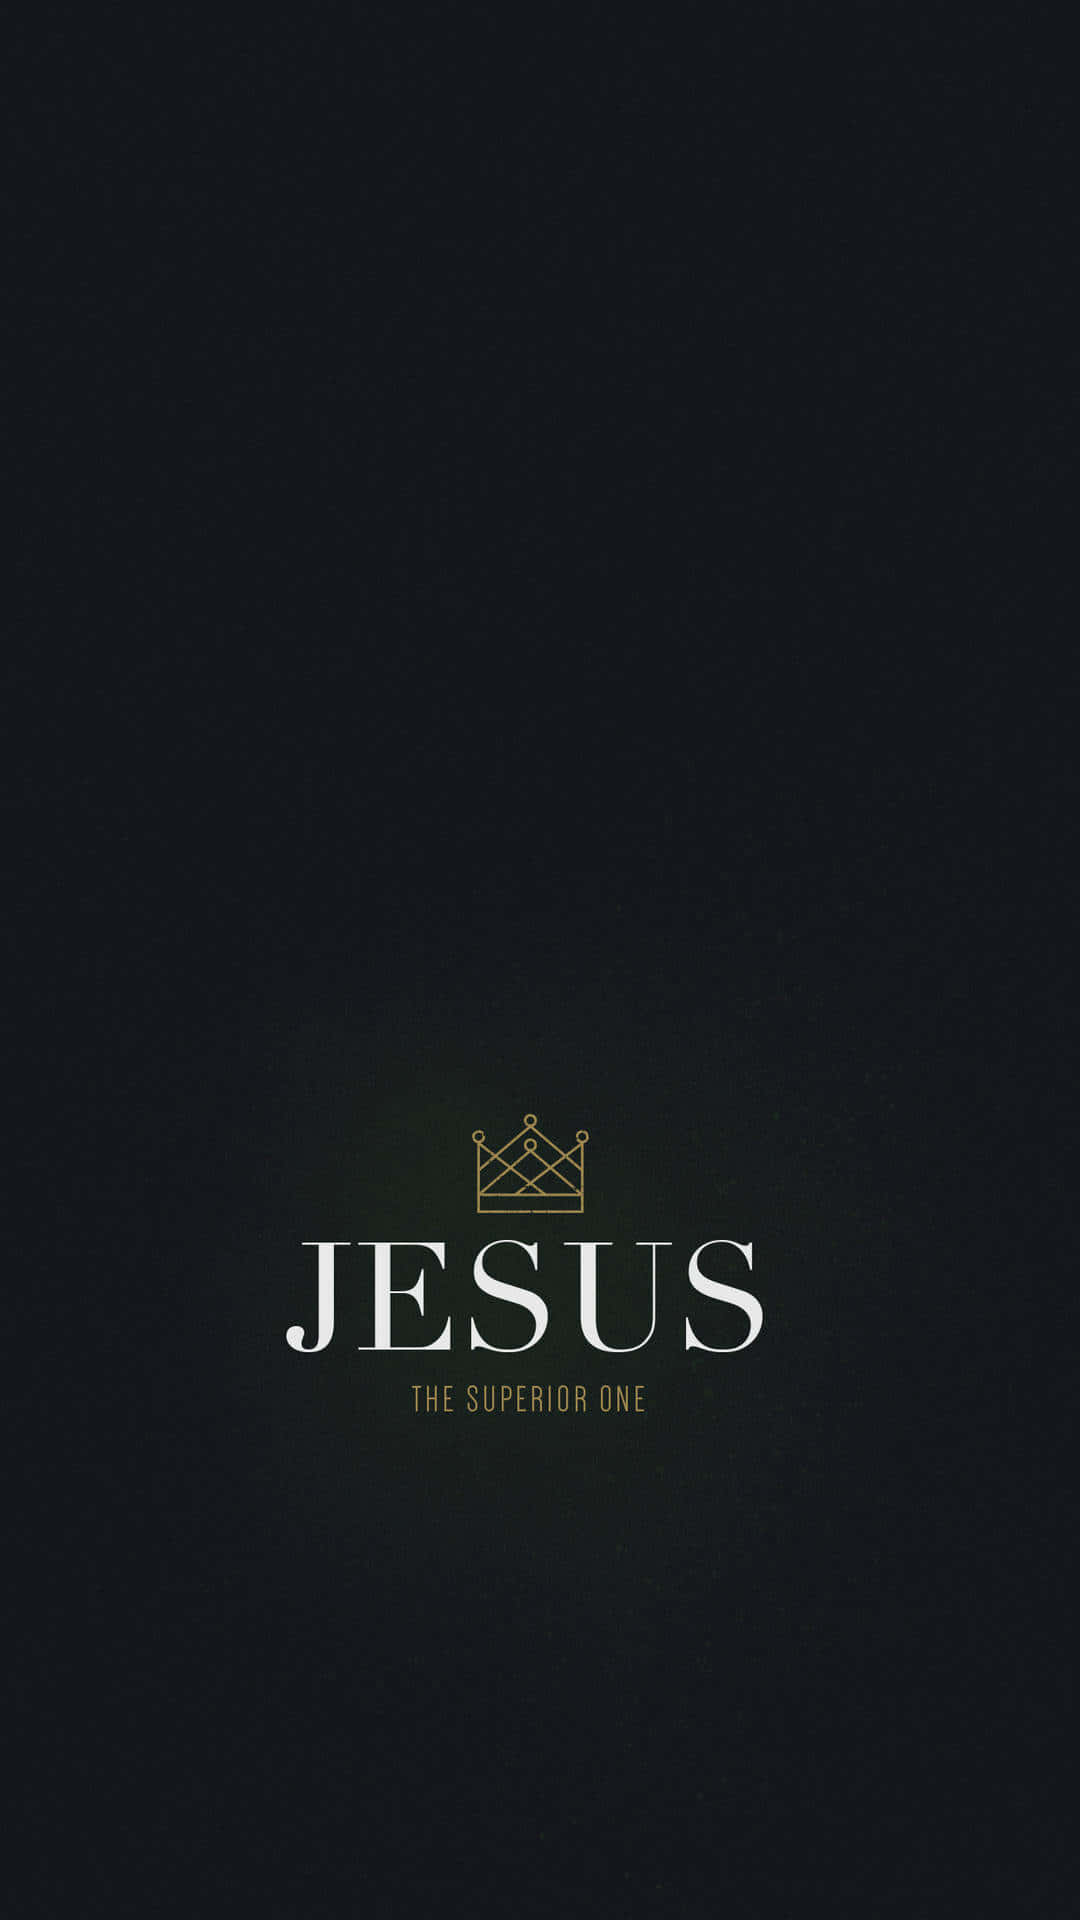 "Jesus is King" Wallpaper